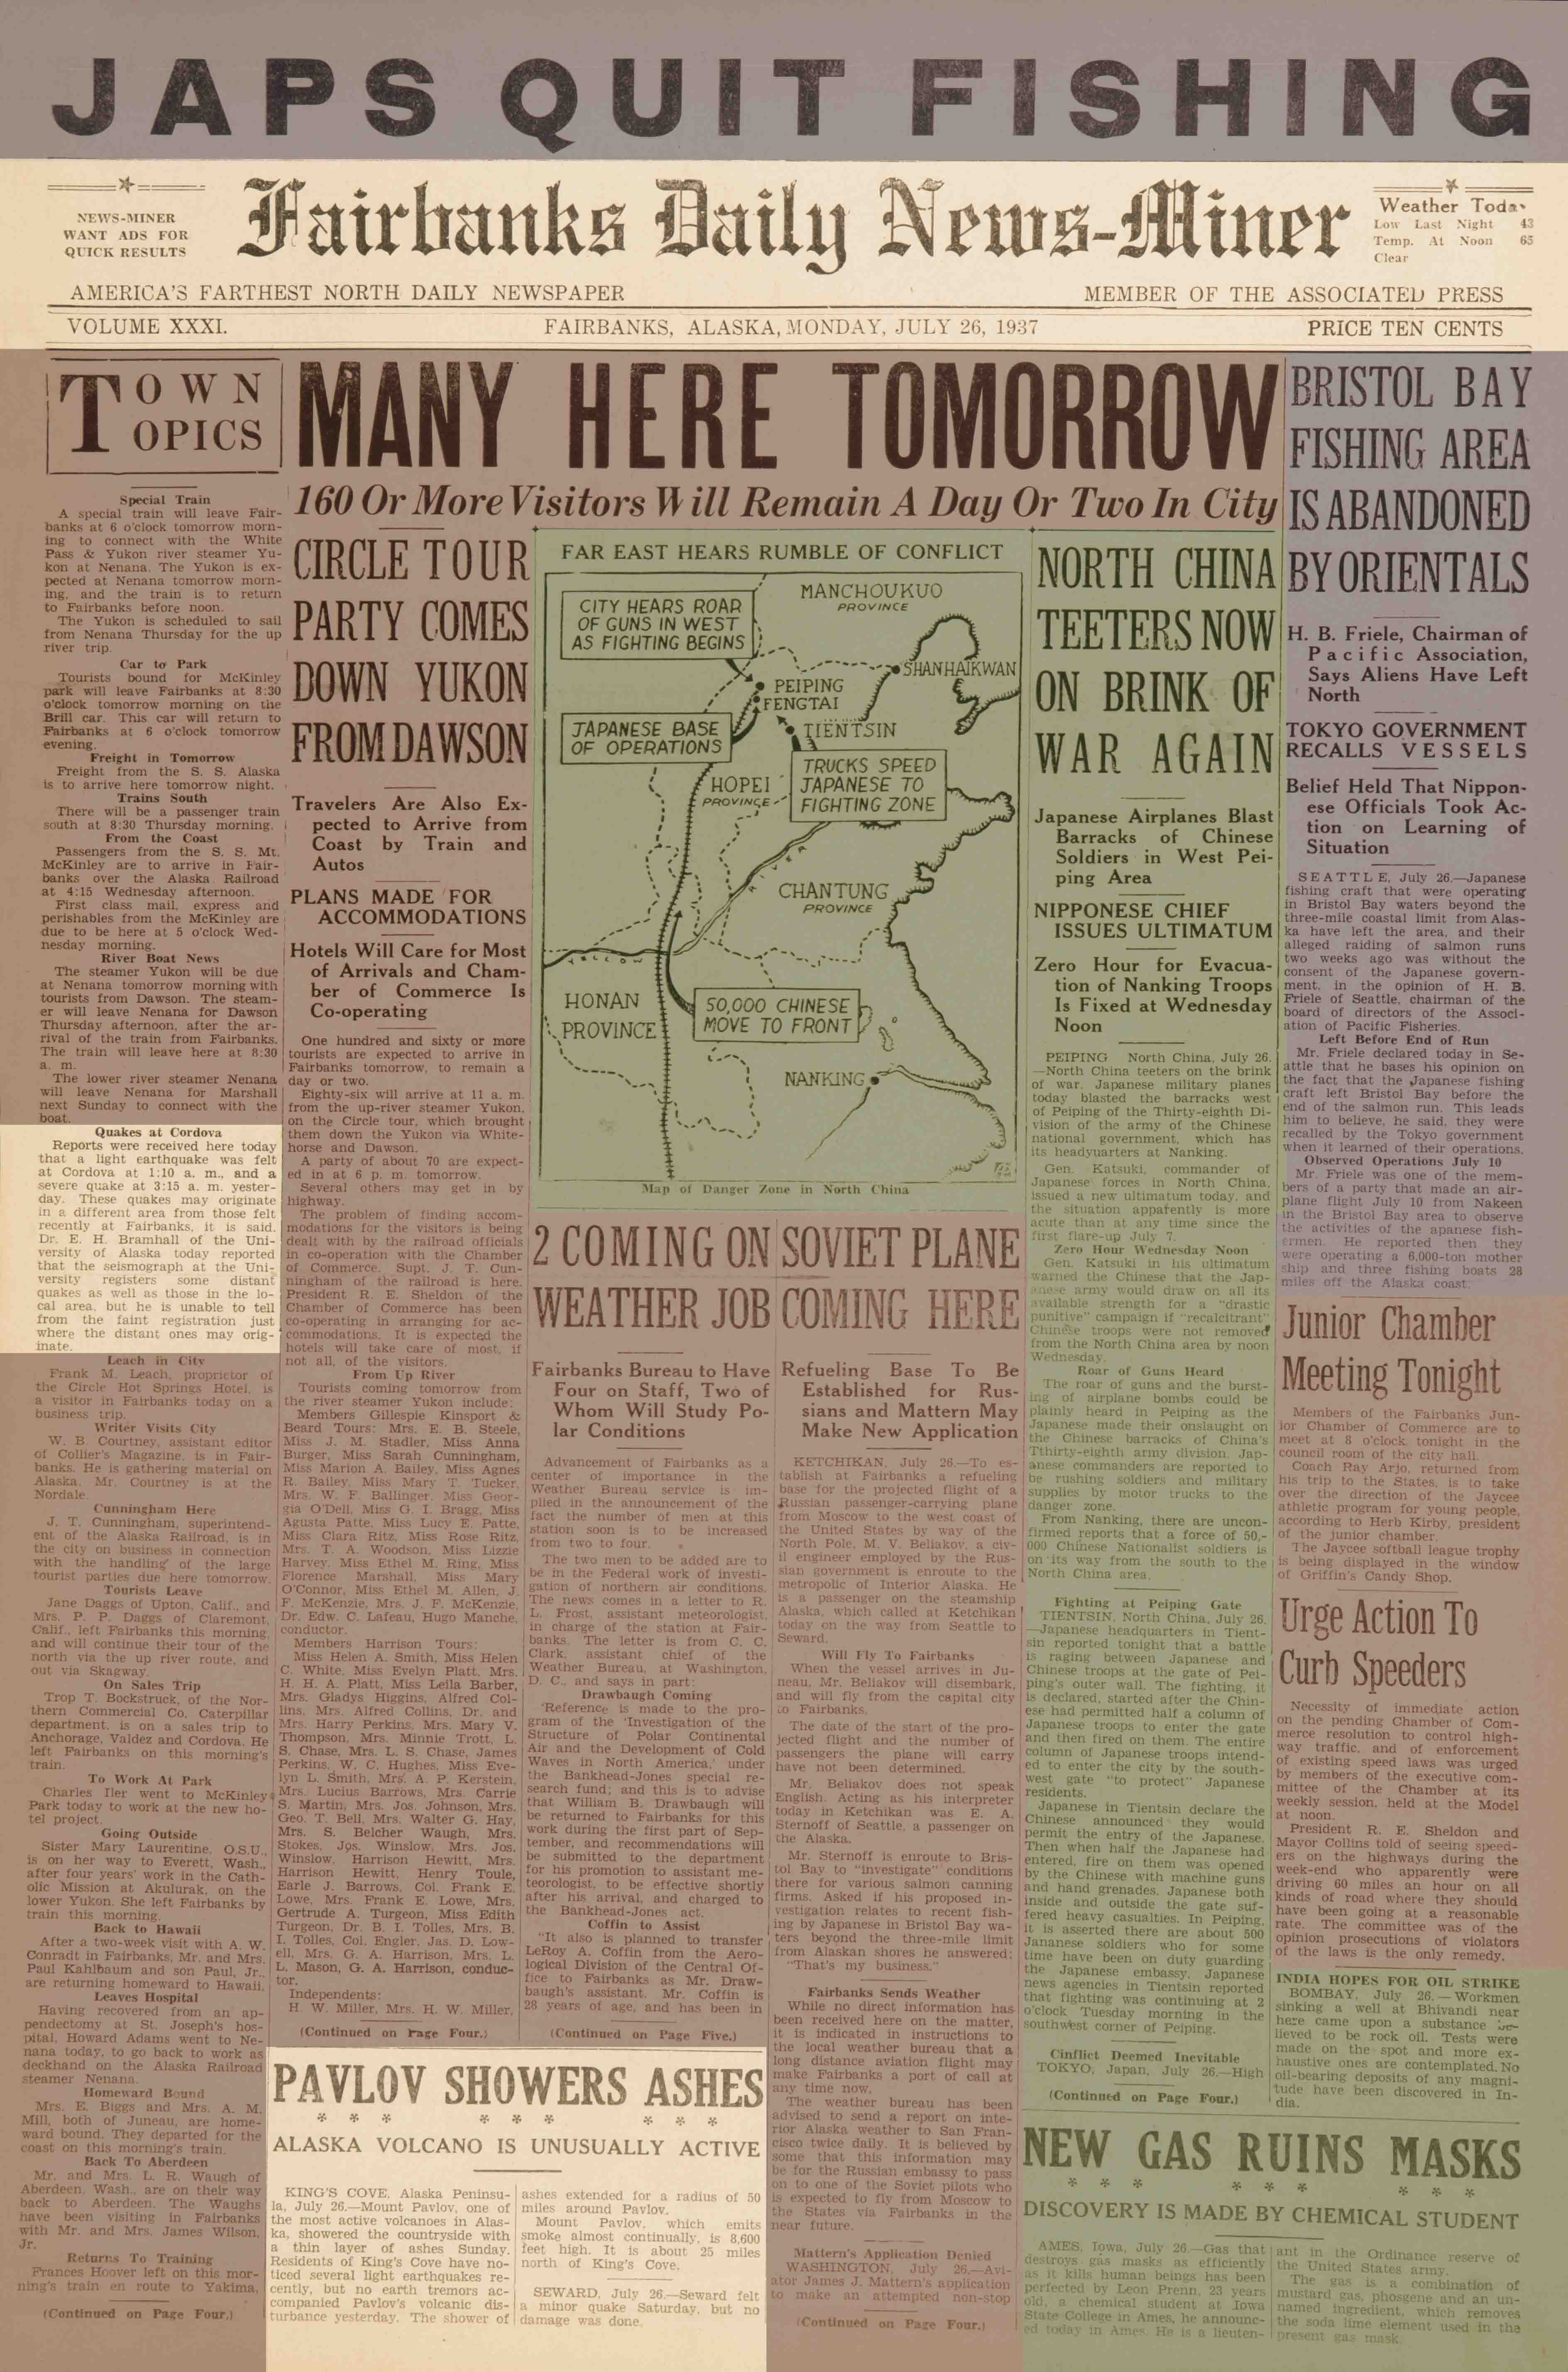 1937 July 26, Fairbanks Daily News-Miner (pg 1)